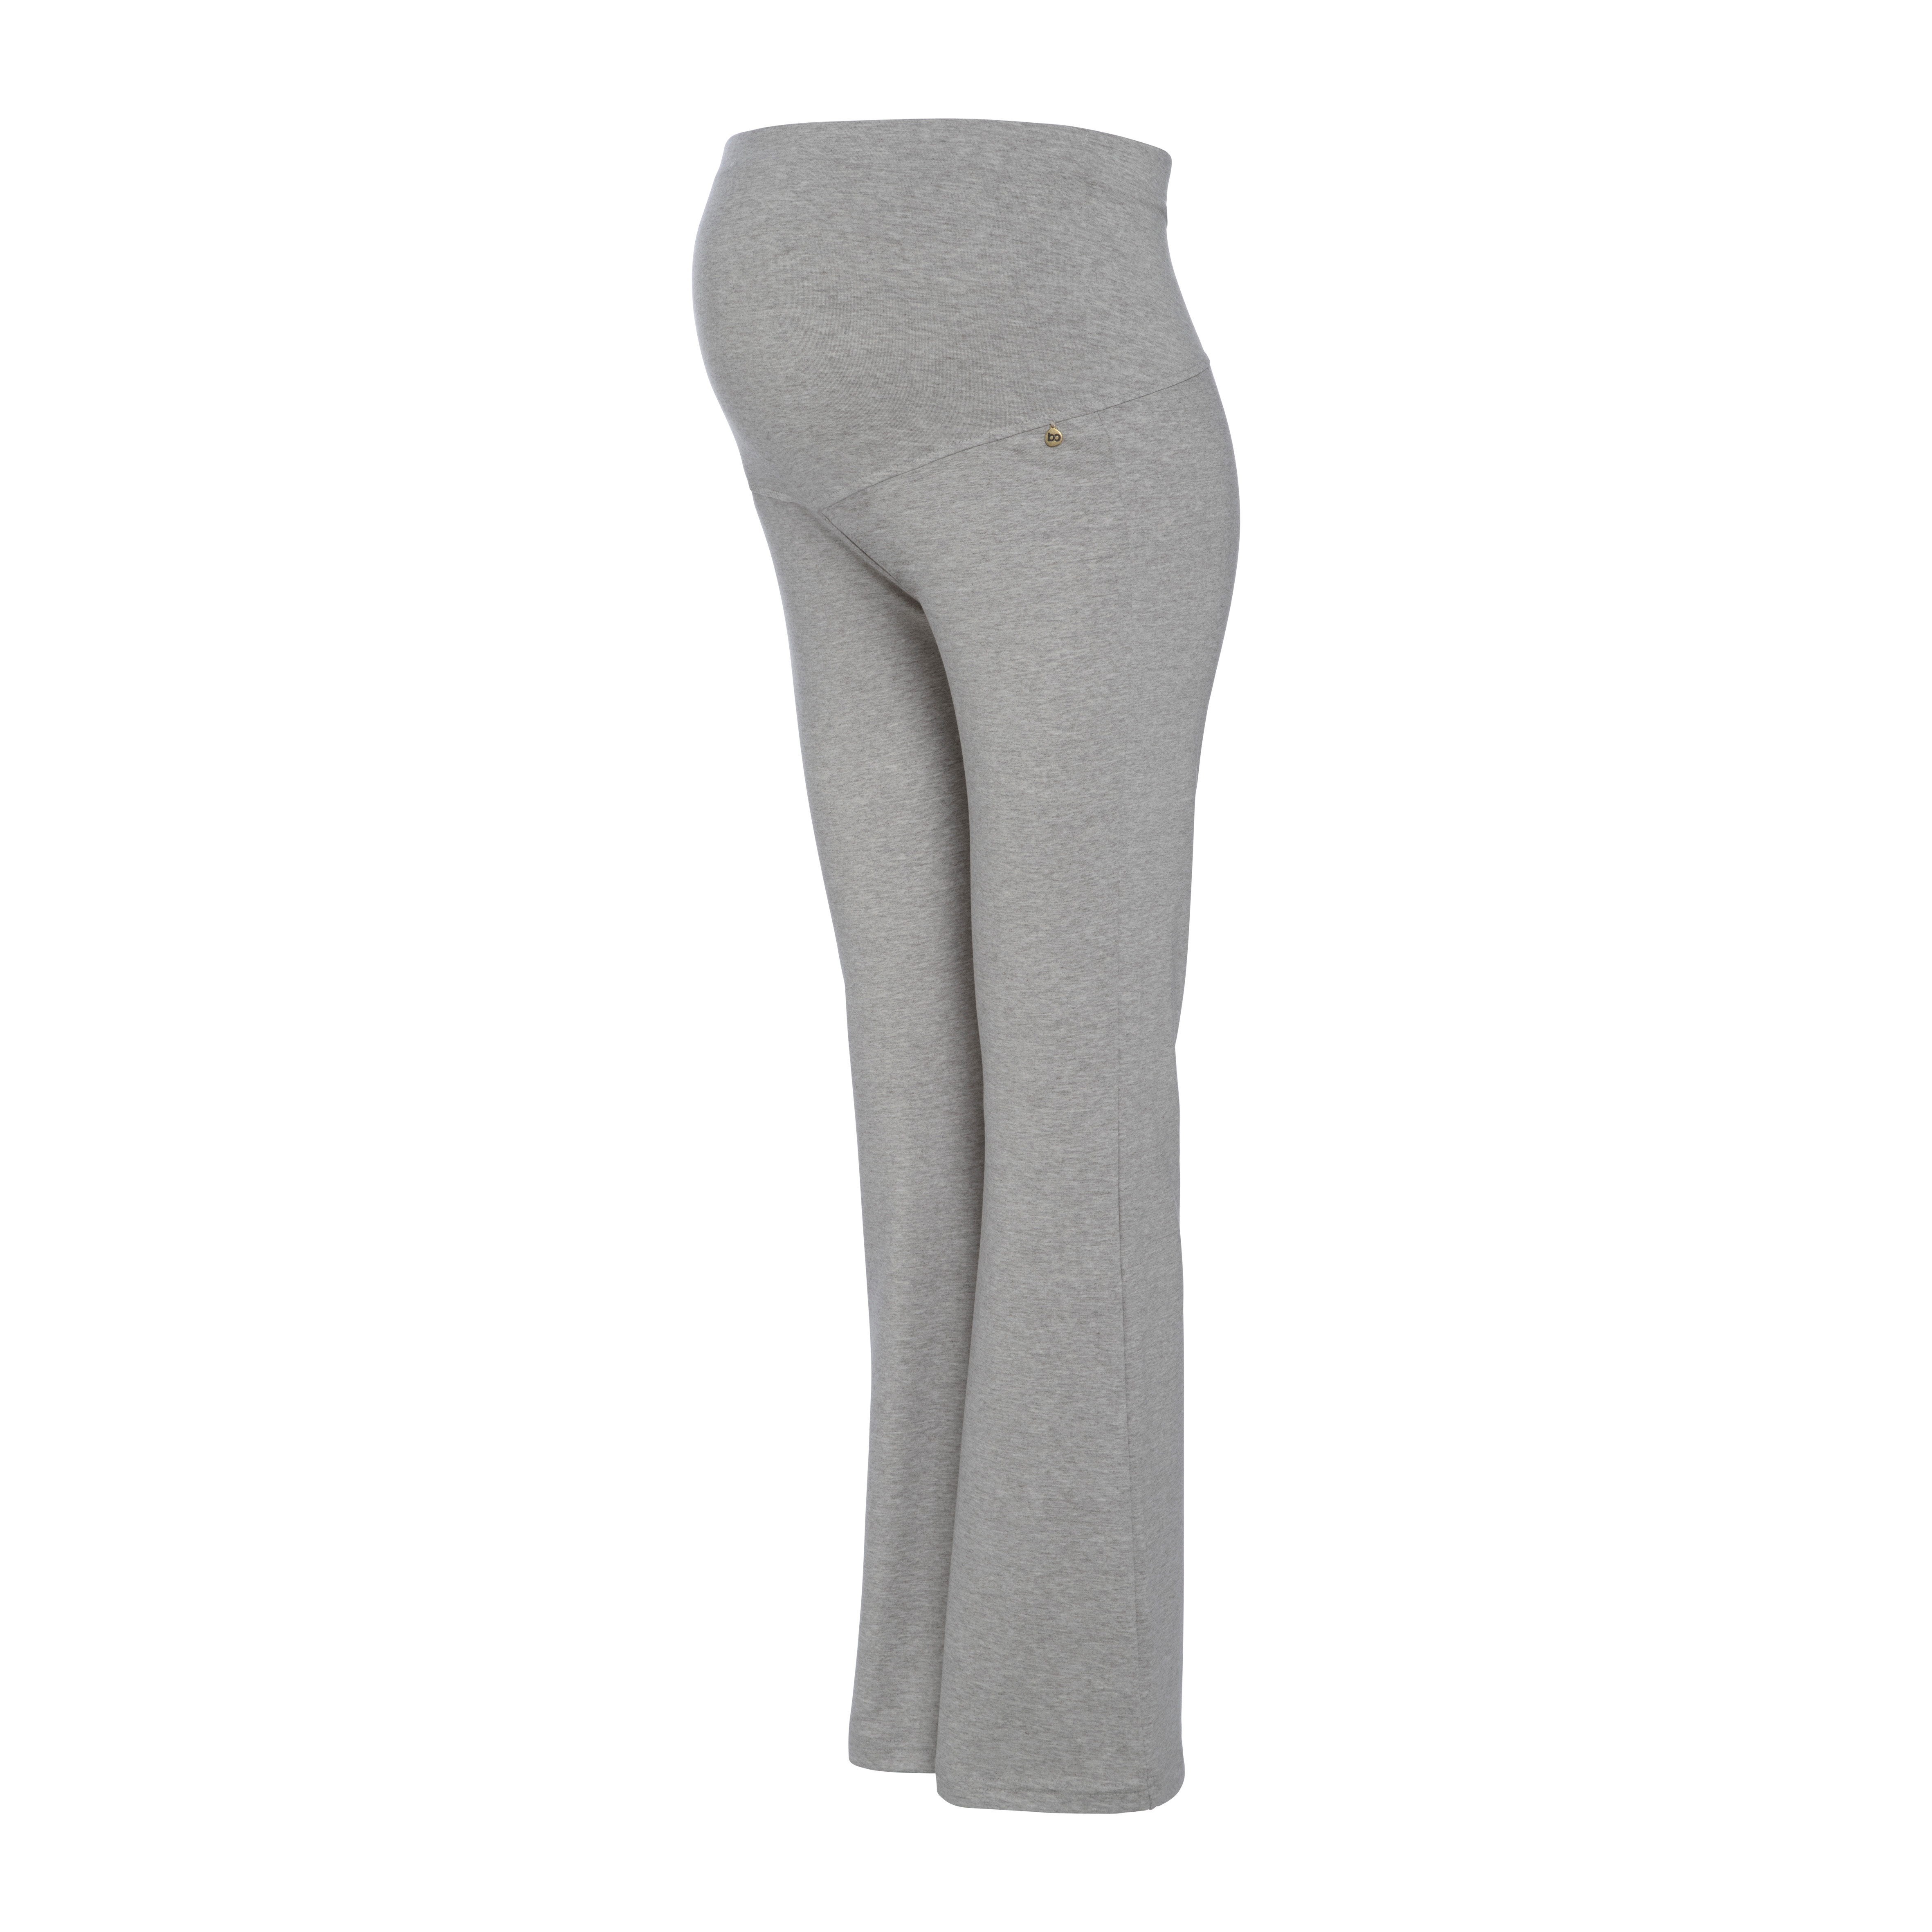 Flared pantalon de maternité Glow dusty grey - S